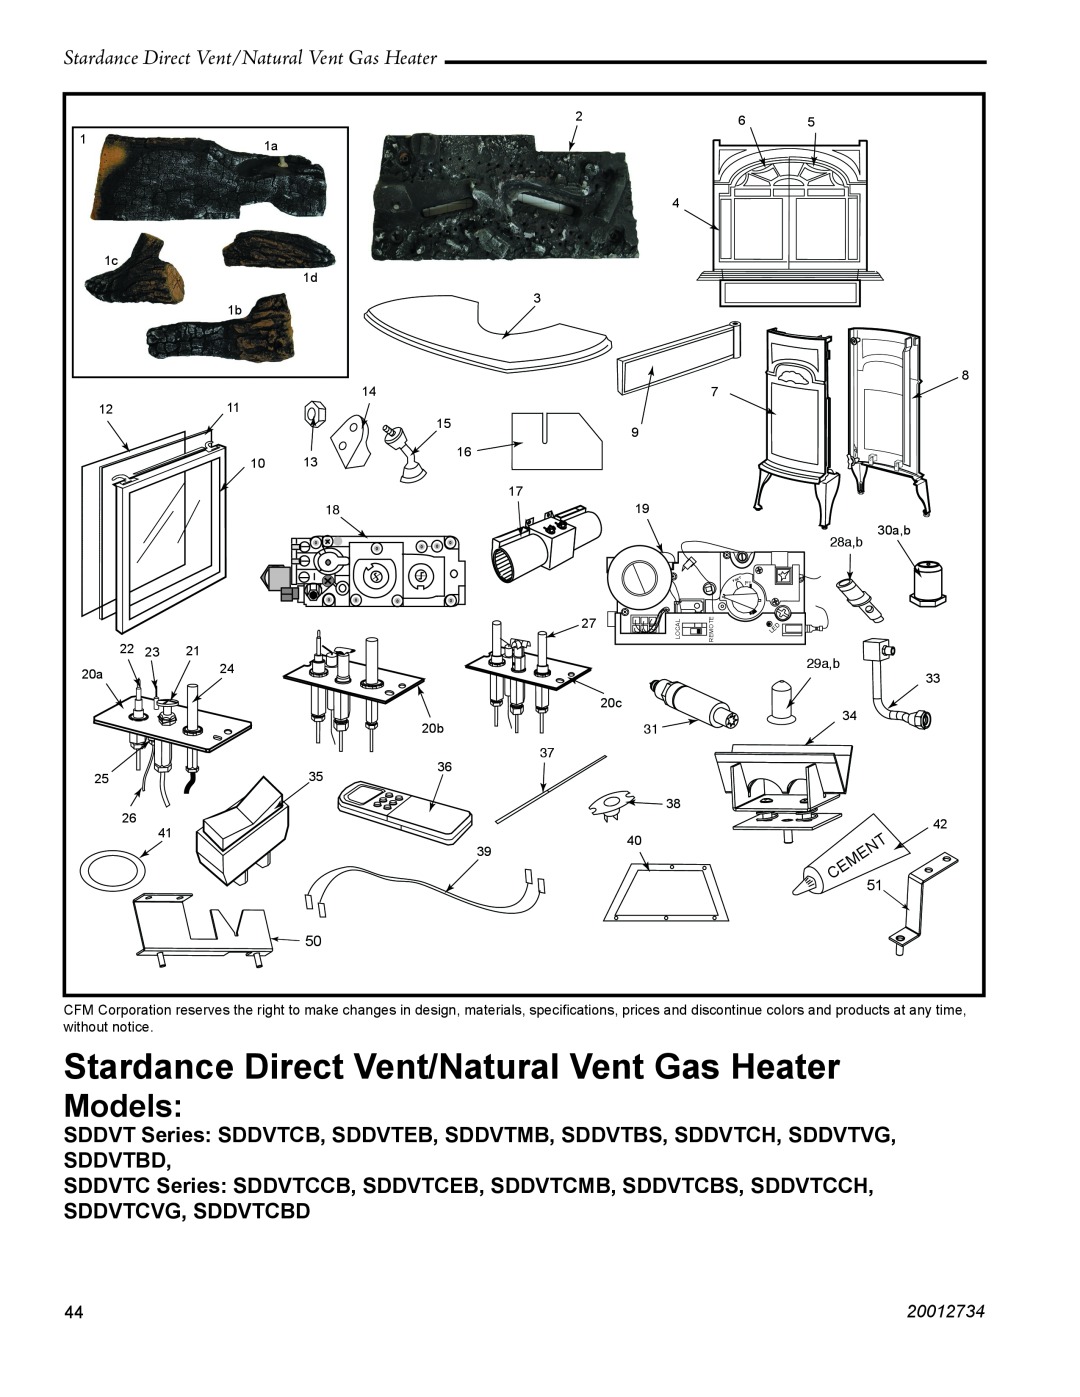 Vermont Casting SDDVT manual Sddvtbd, Sddvtcvg, Sddvtcbd, Stardance Direct Vent/Natural Vent Gas Heater, Models, 20012734 